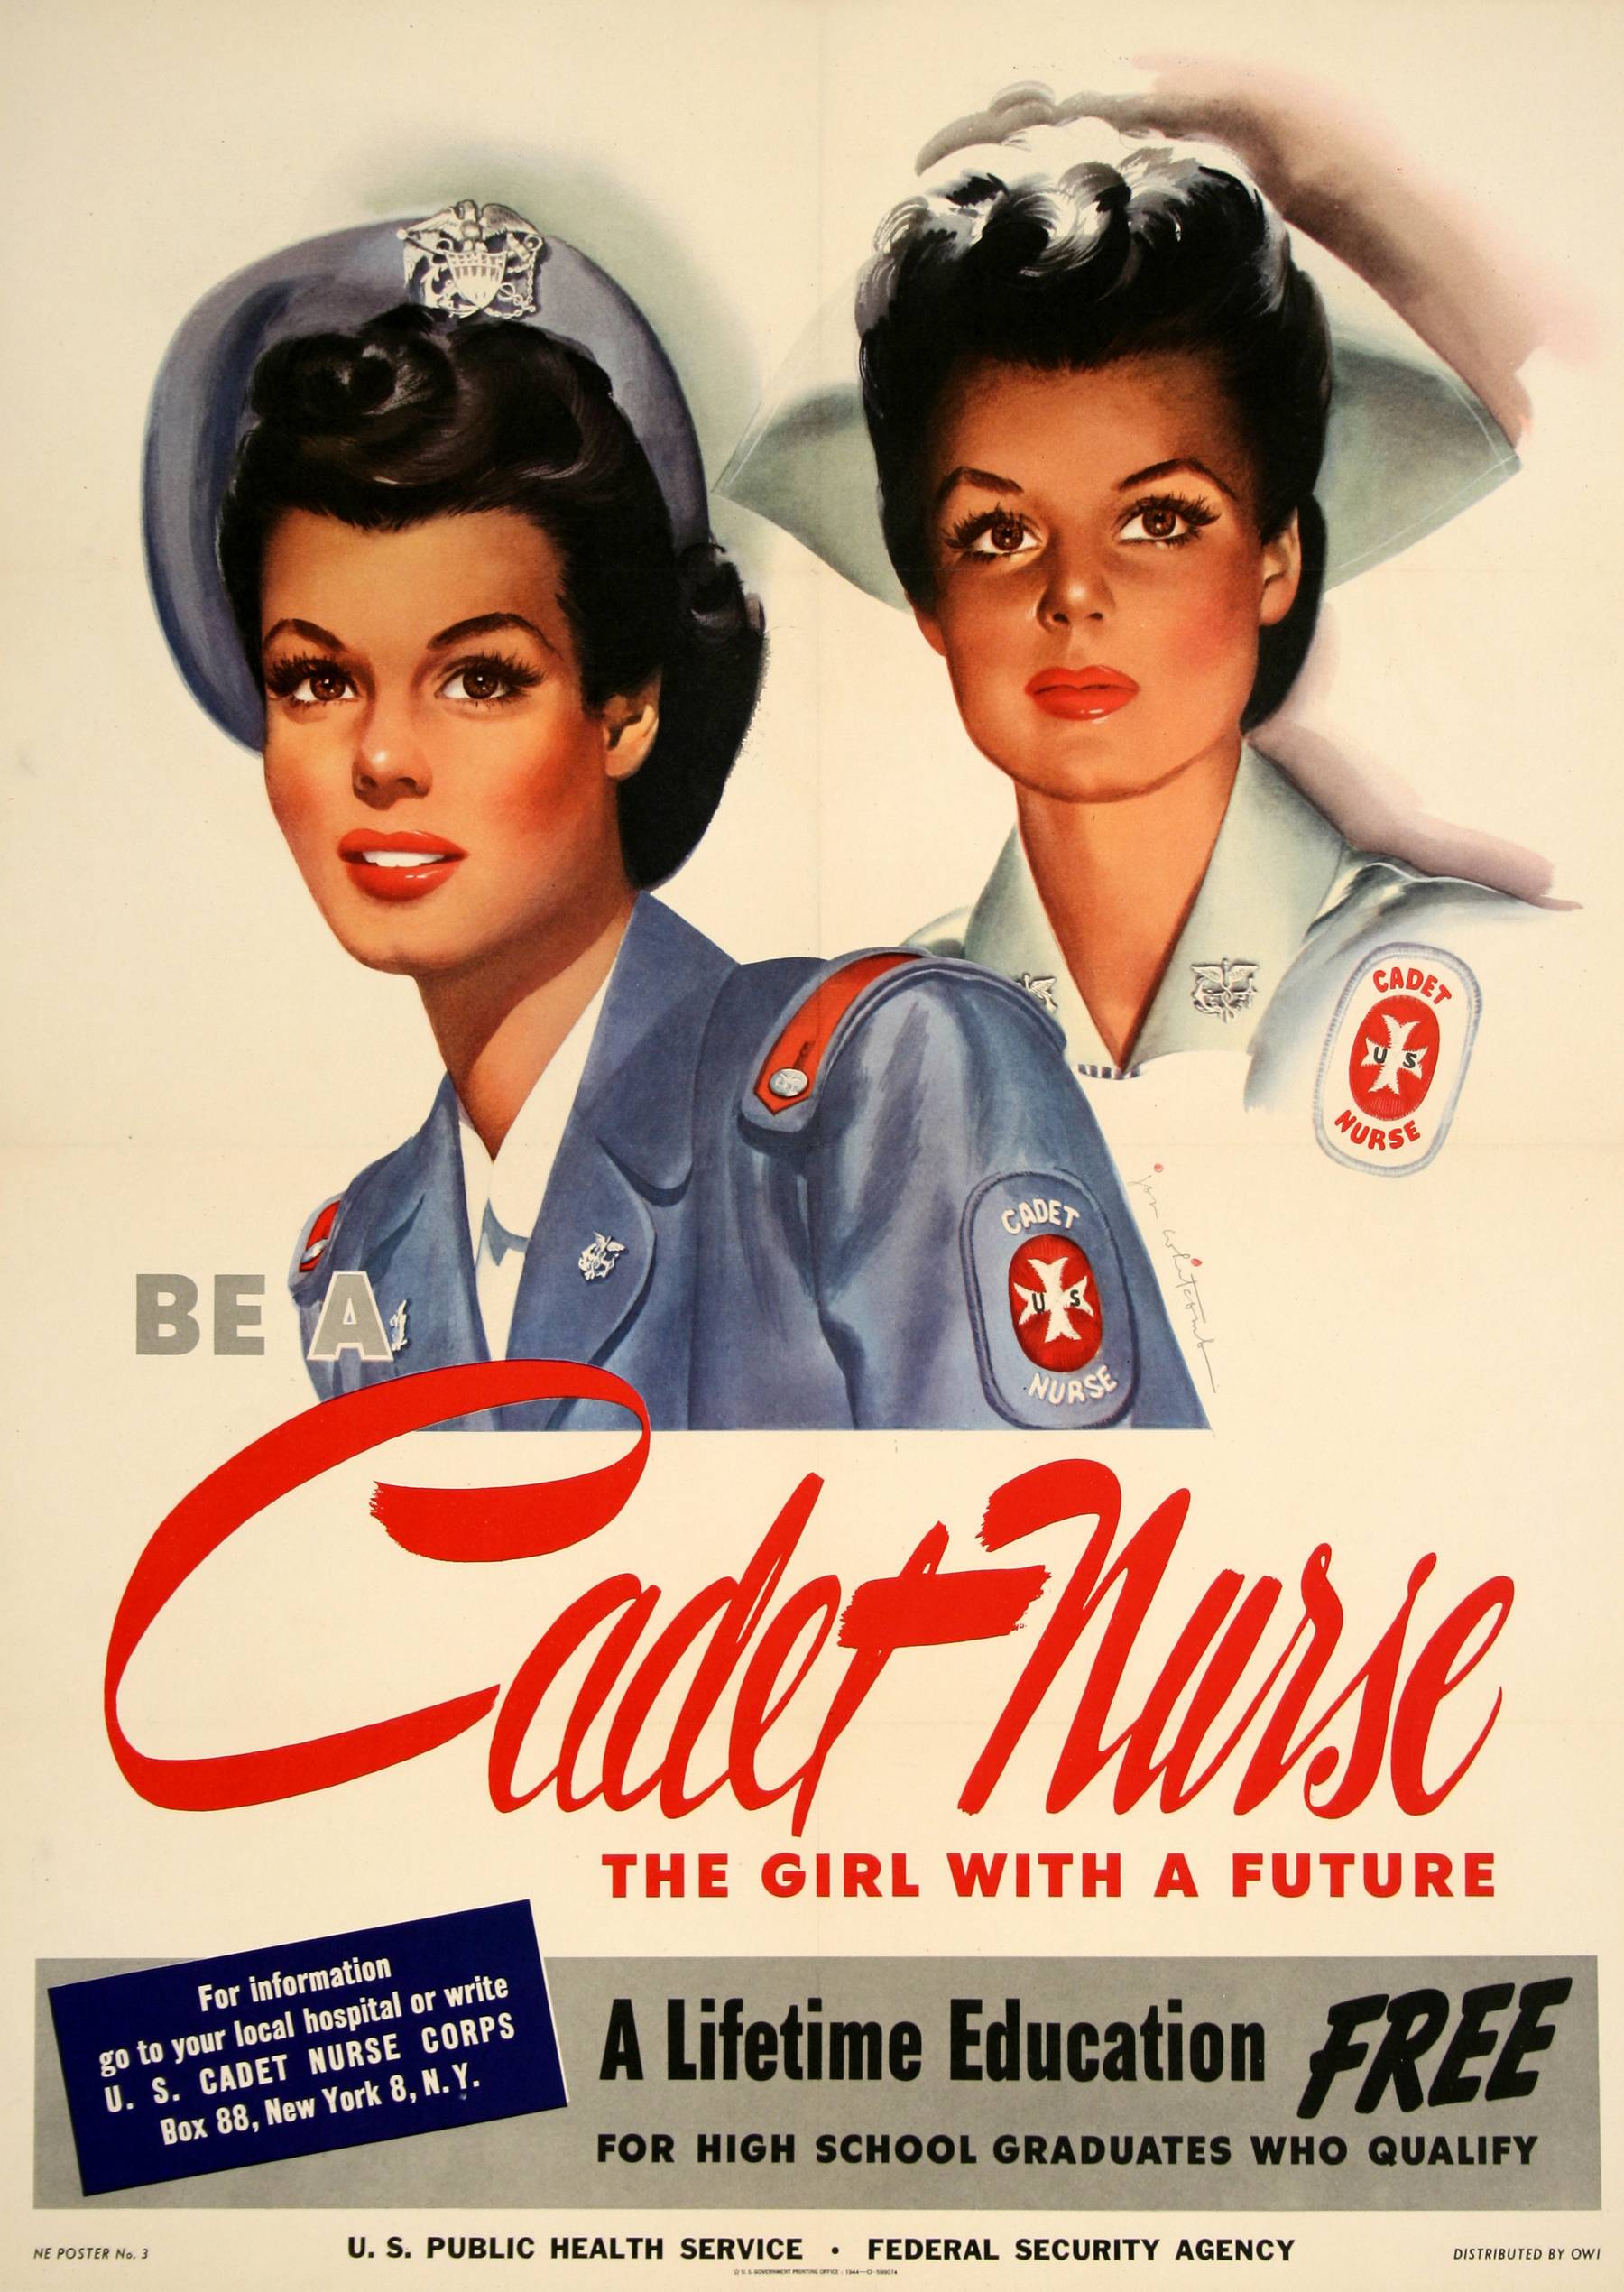 Be A Cadet Nurse - Whitcomb